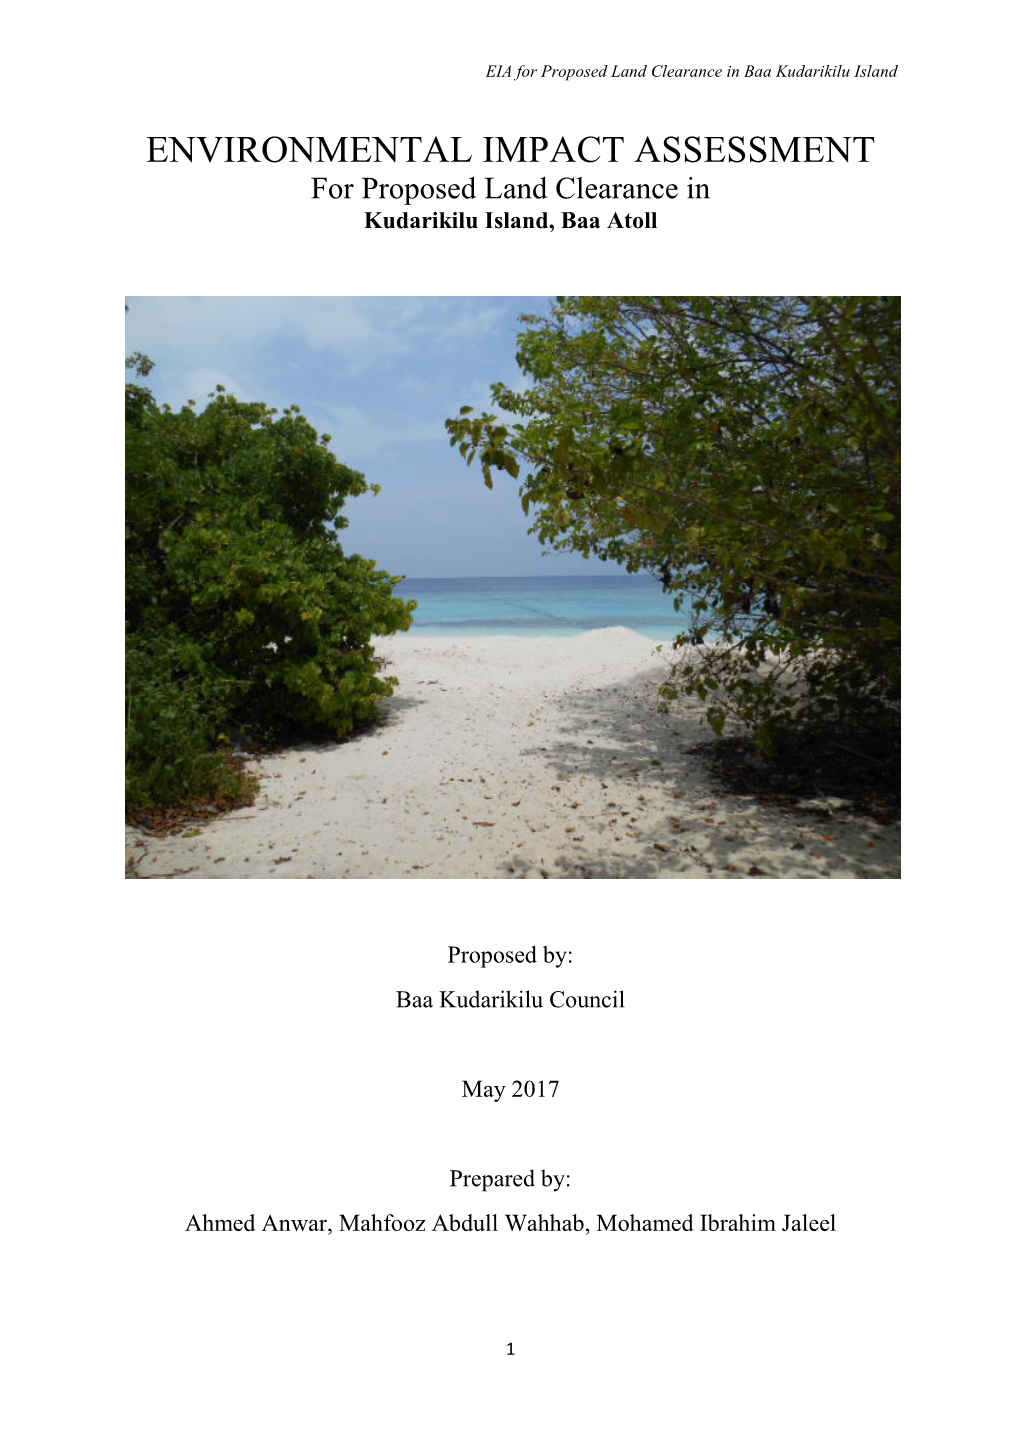 ENVIRONMENTAL IMPACT ASSESSMENT for Proposed Land Clearance in Kudarikilu Island, Baa Atoll